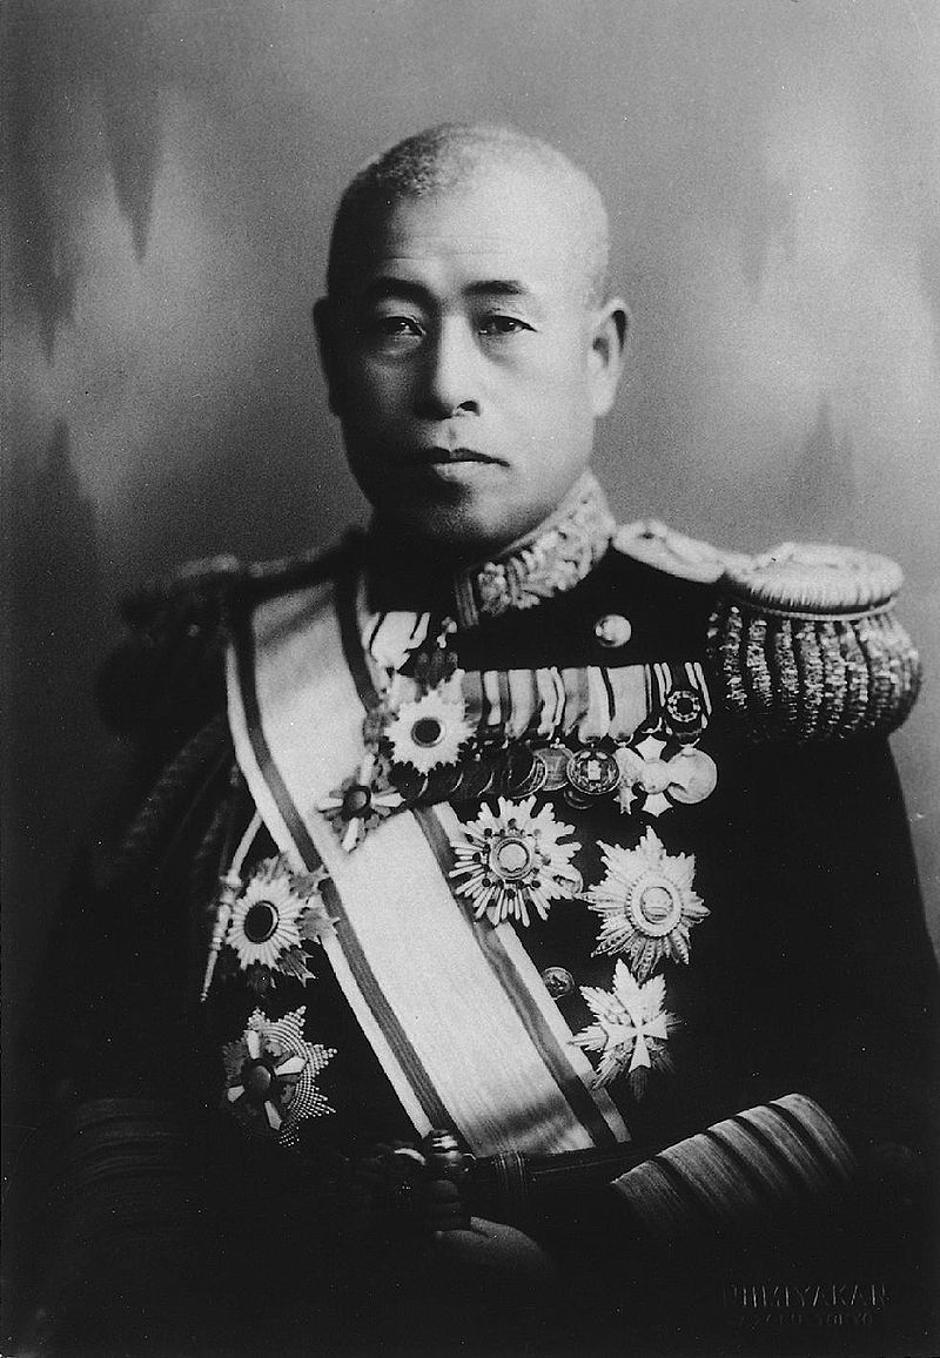 Isoroku Jamamoto | Author: Wikipedia